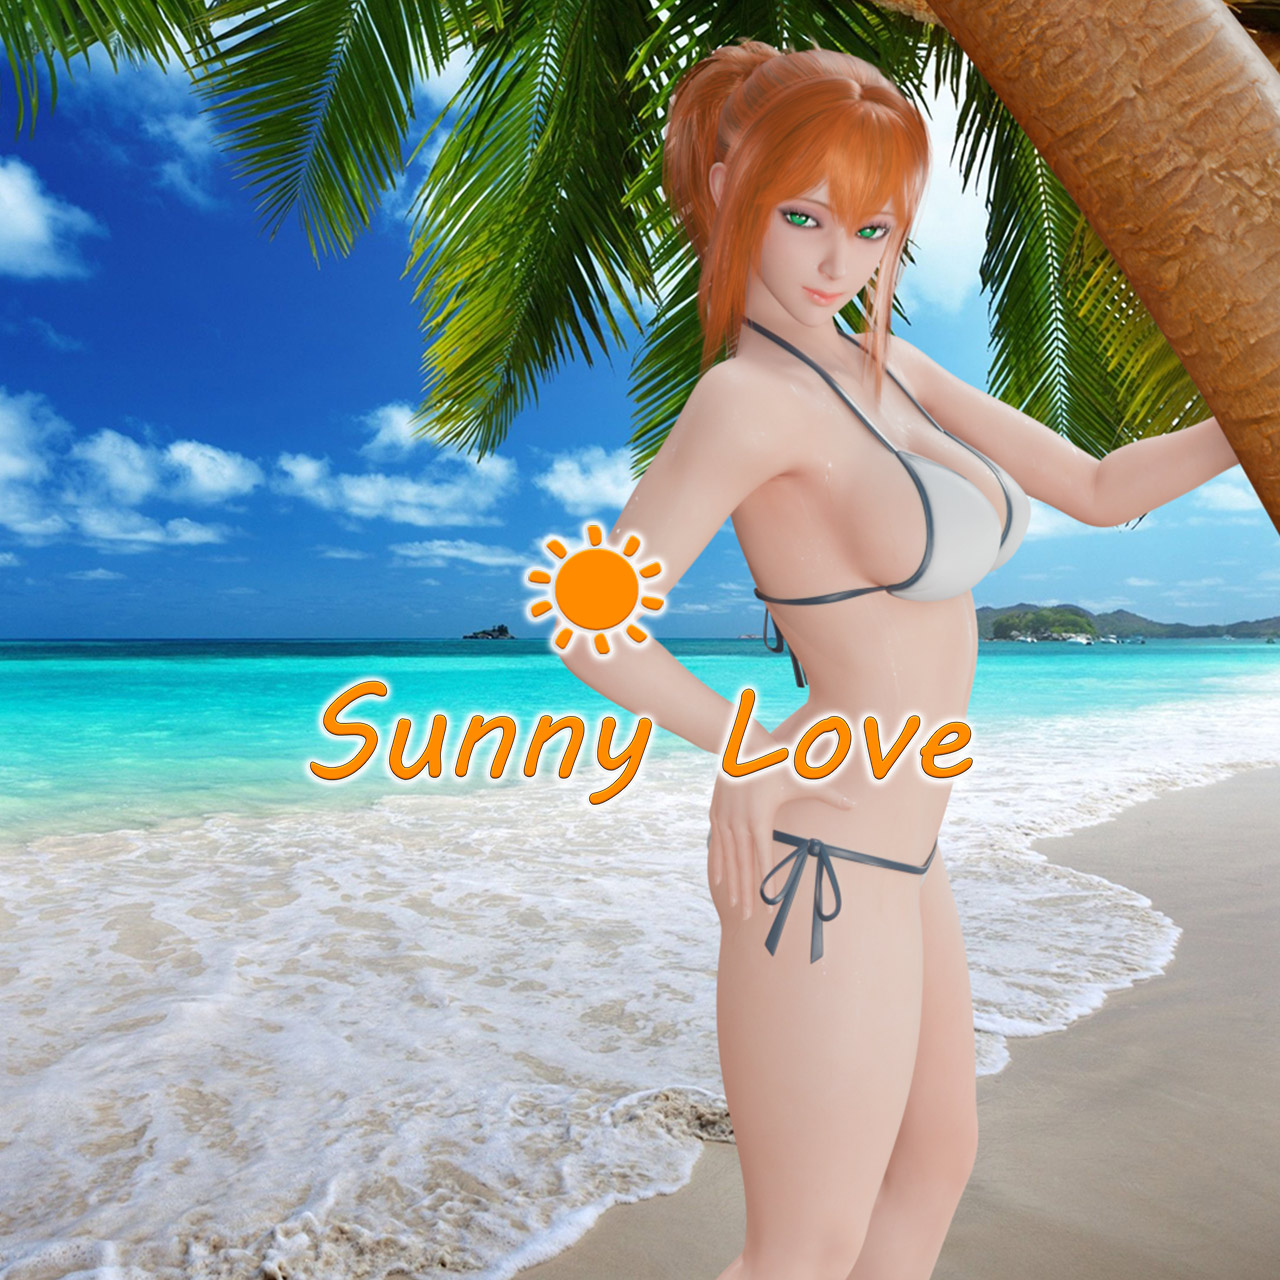 Sunnylovesex - Sunny Love - Adventure Sex Game | Nutaku